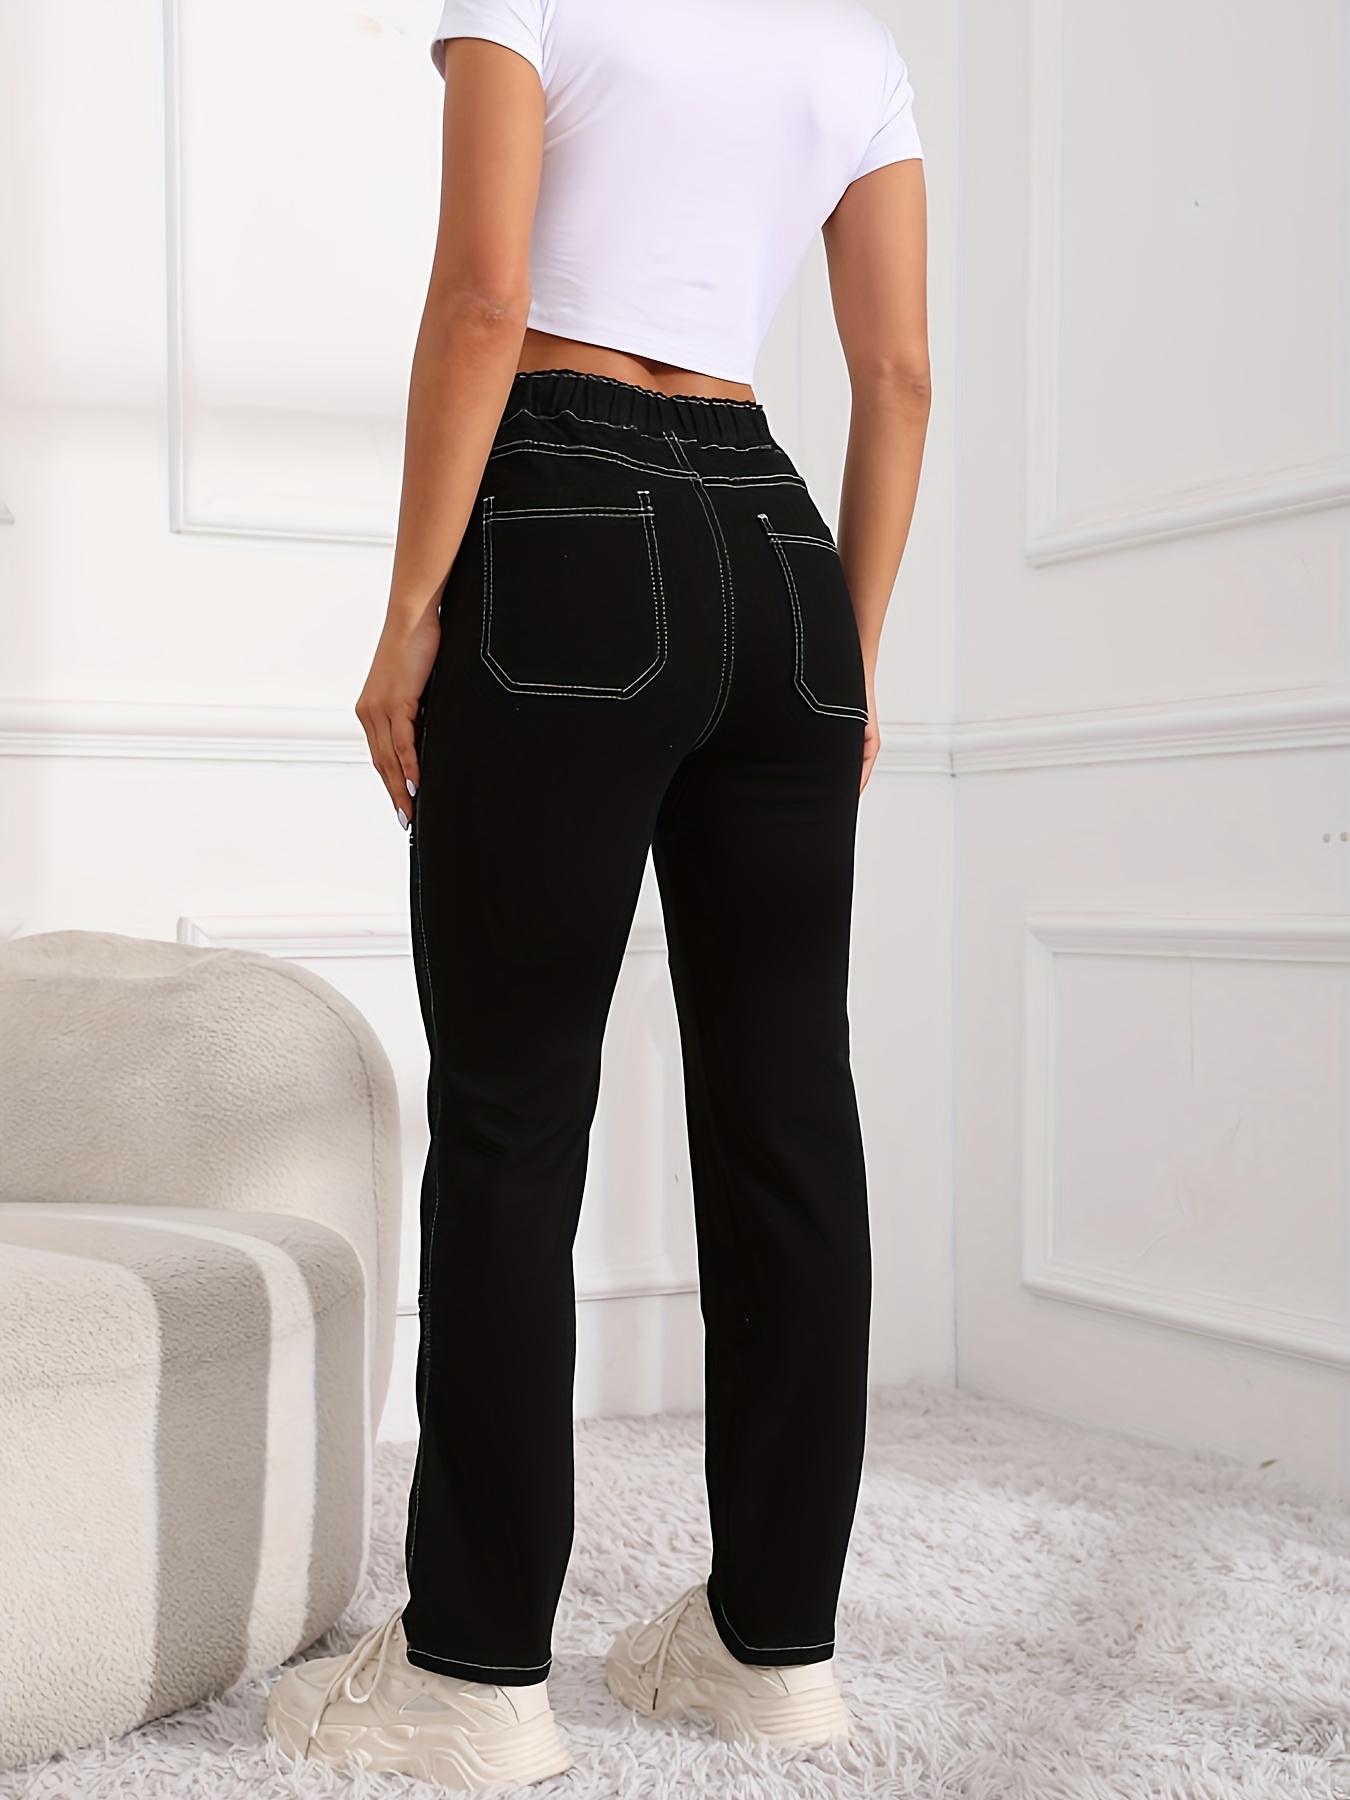 drawstring elastic waist straight jeans loose fit stretchy denim pants womens denim jeans clothing